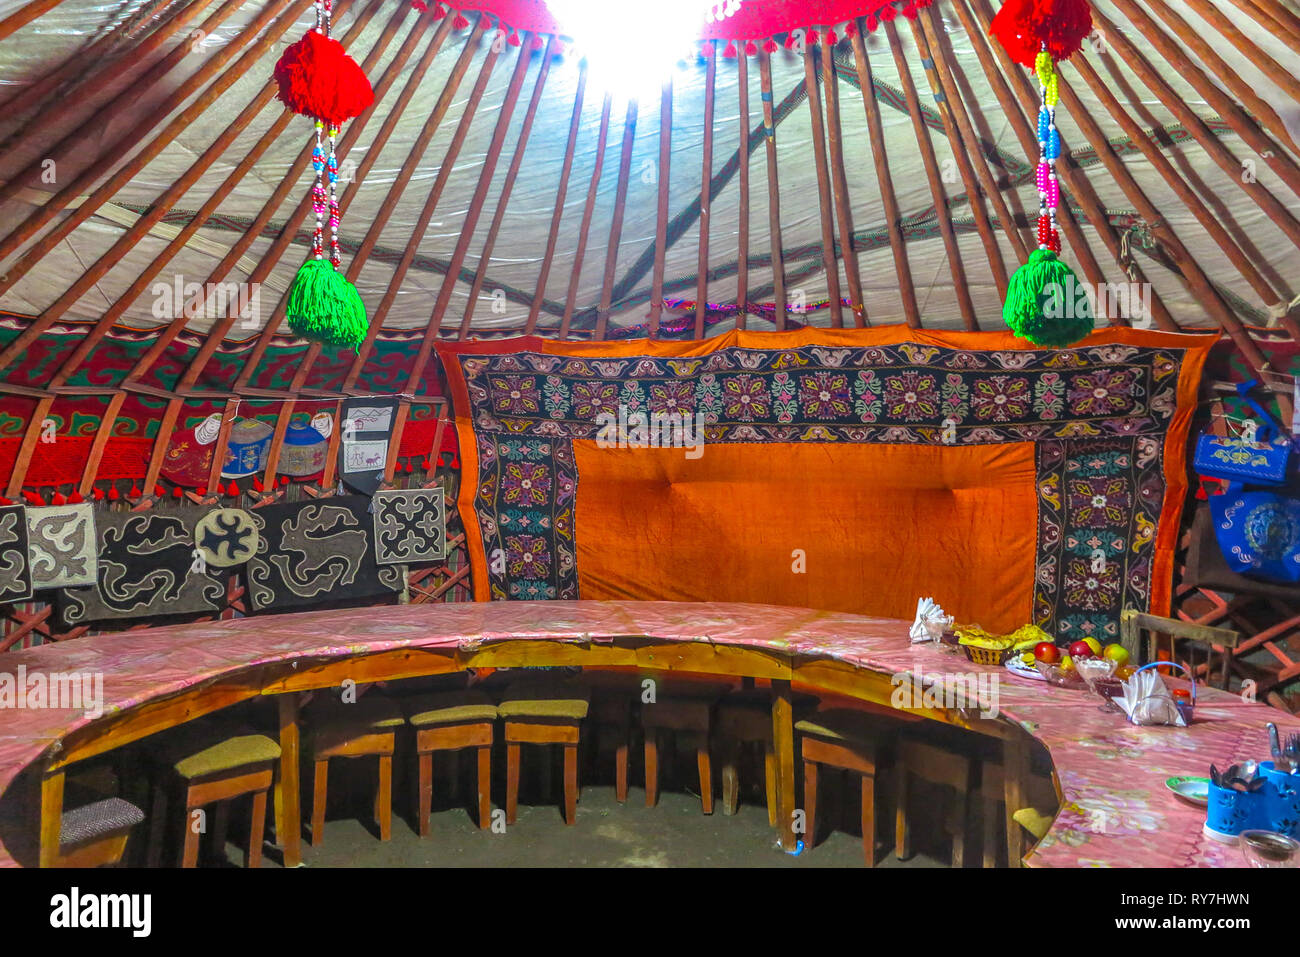 Tash Rabat Caravanserai Traditional Kyrgyz Yurt Interior Guest Room with Felt Carpet Ornament Stock Photo